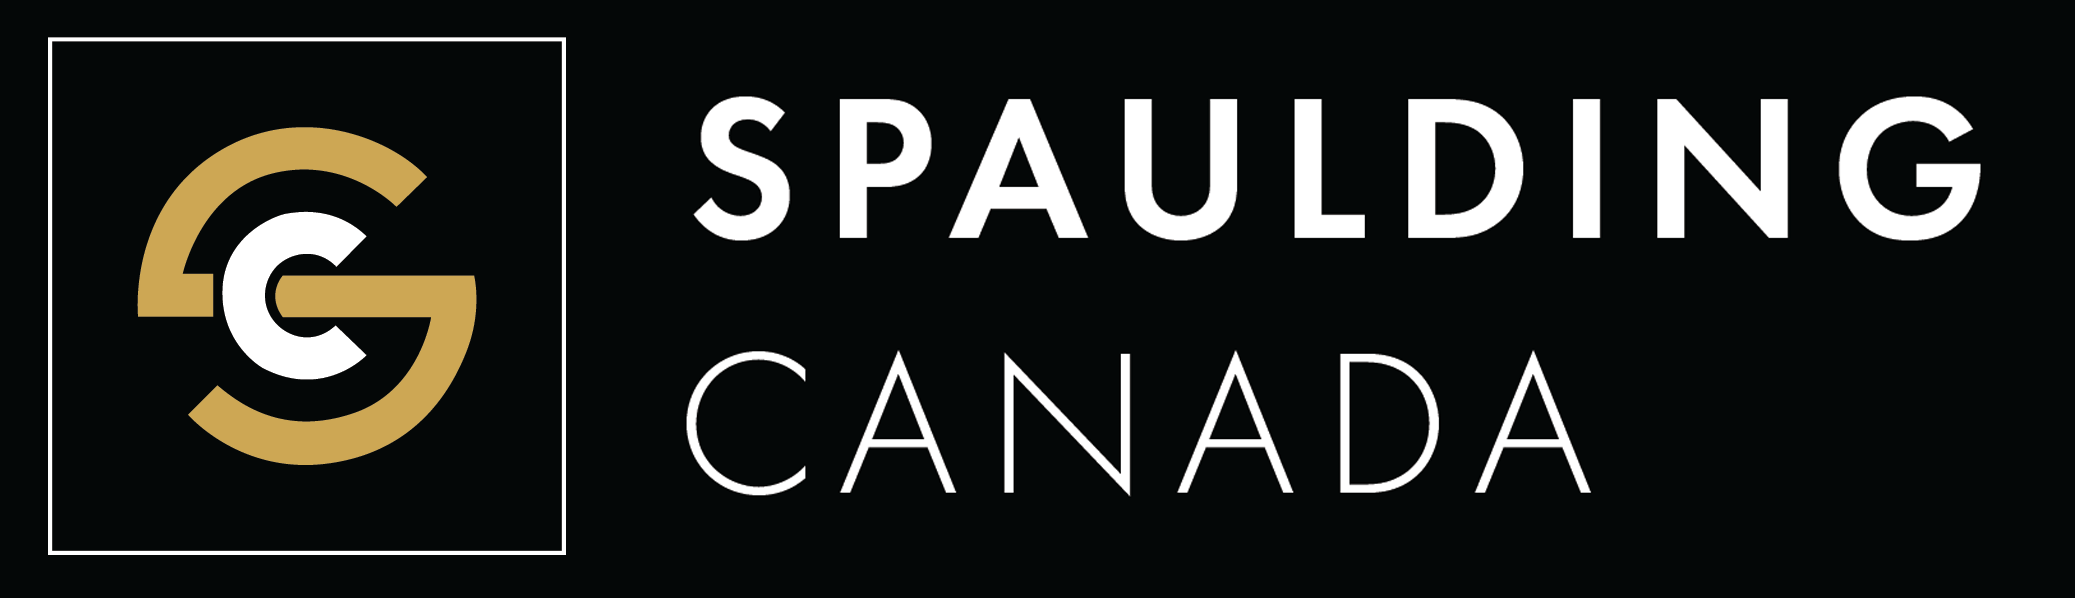 Spaulding Canada- Be Creative!